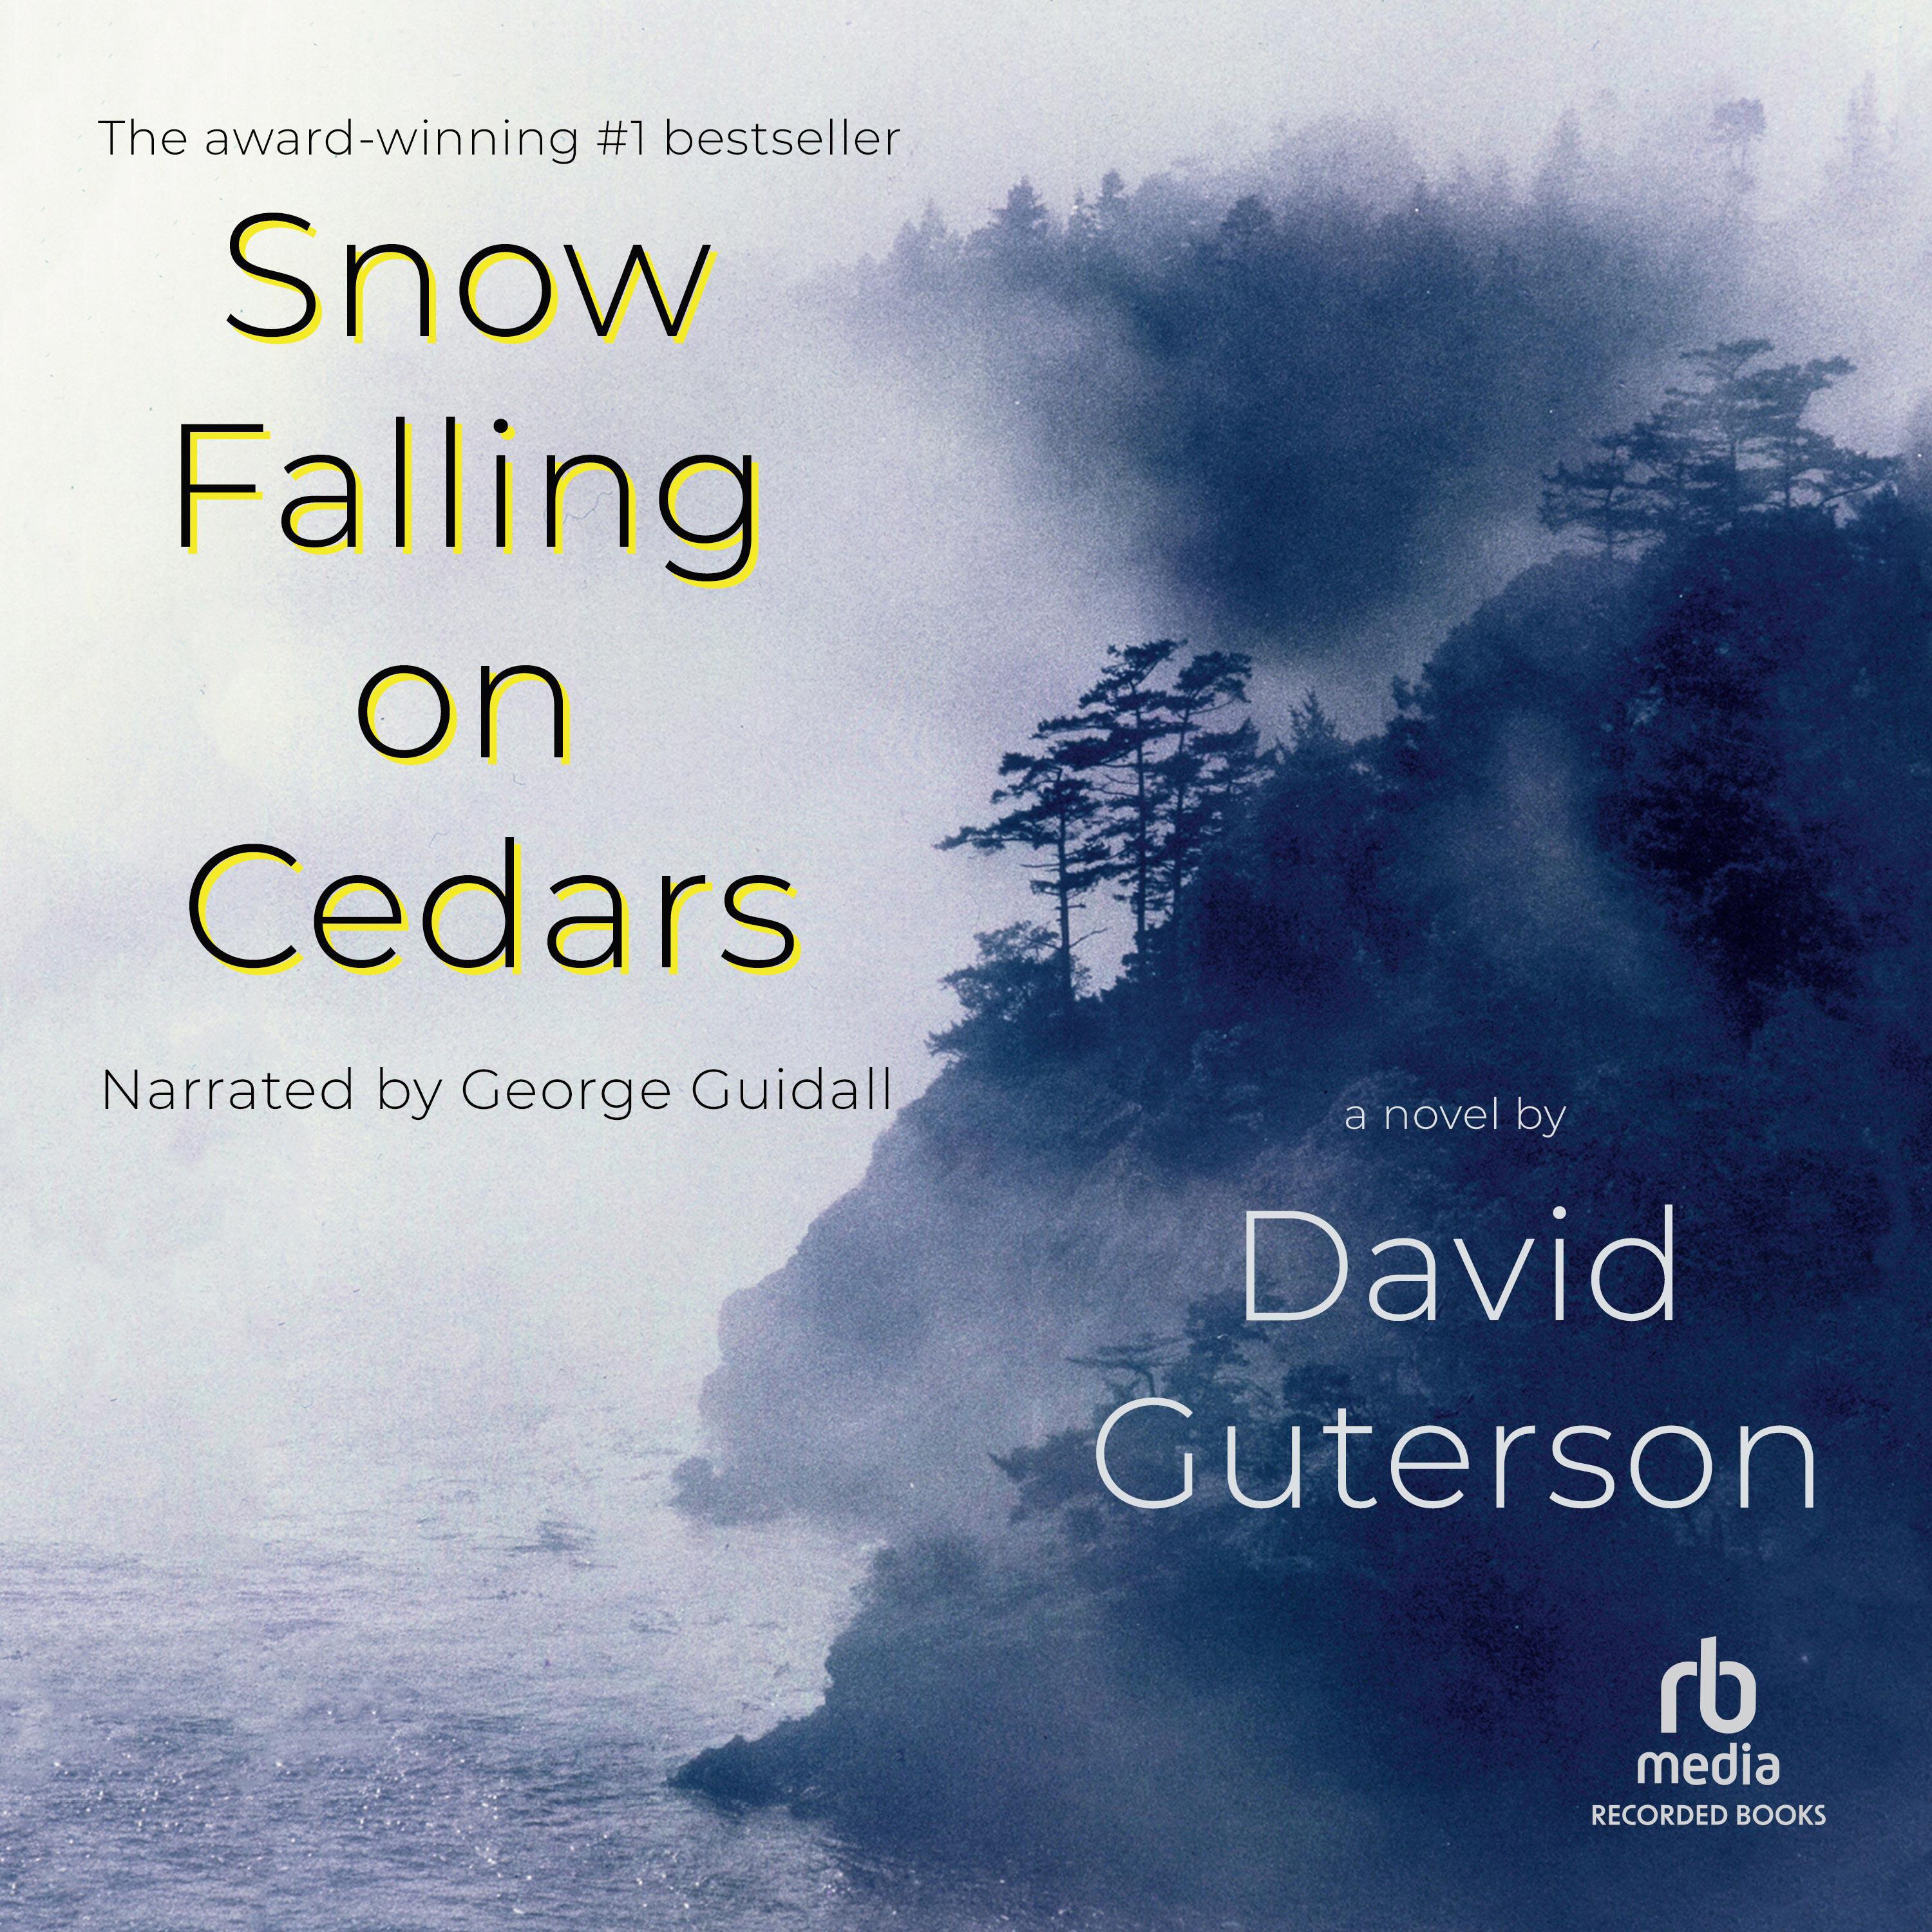 snow falling on cedars author